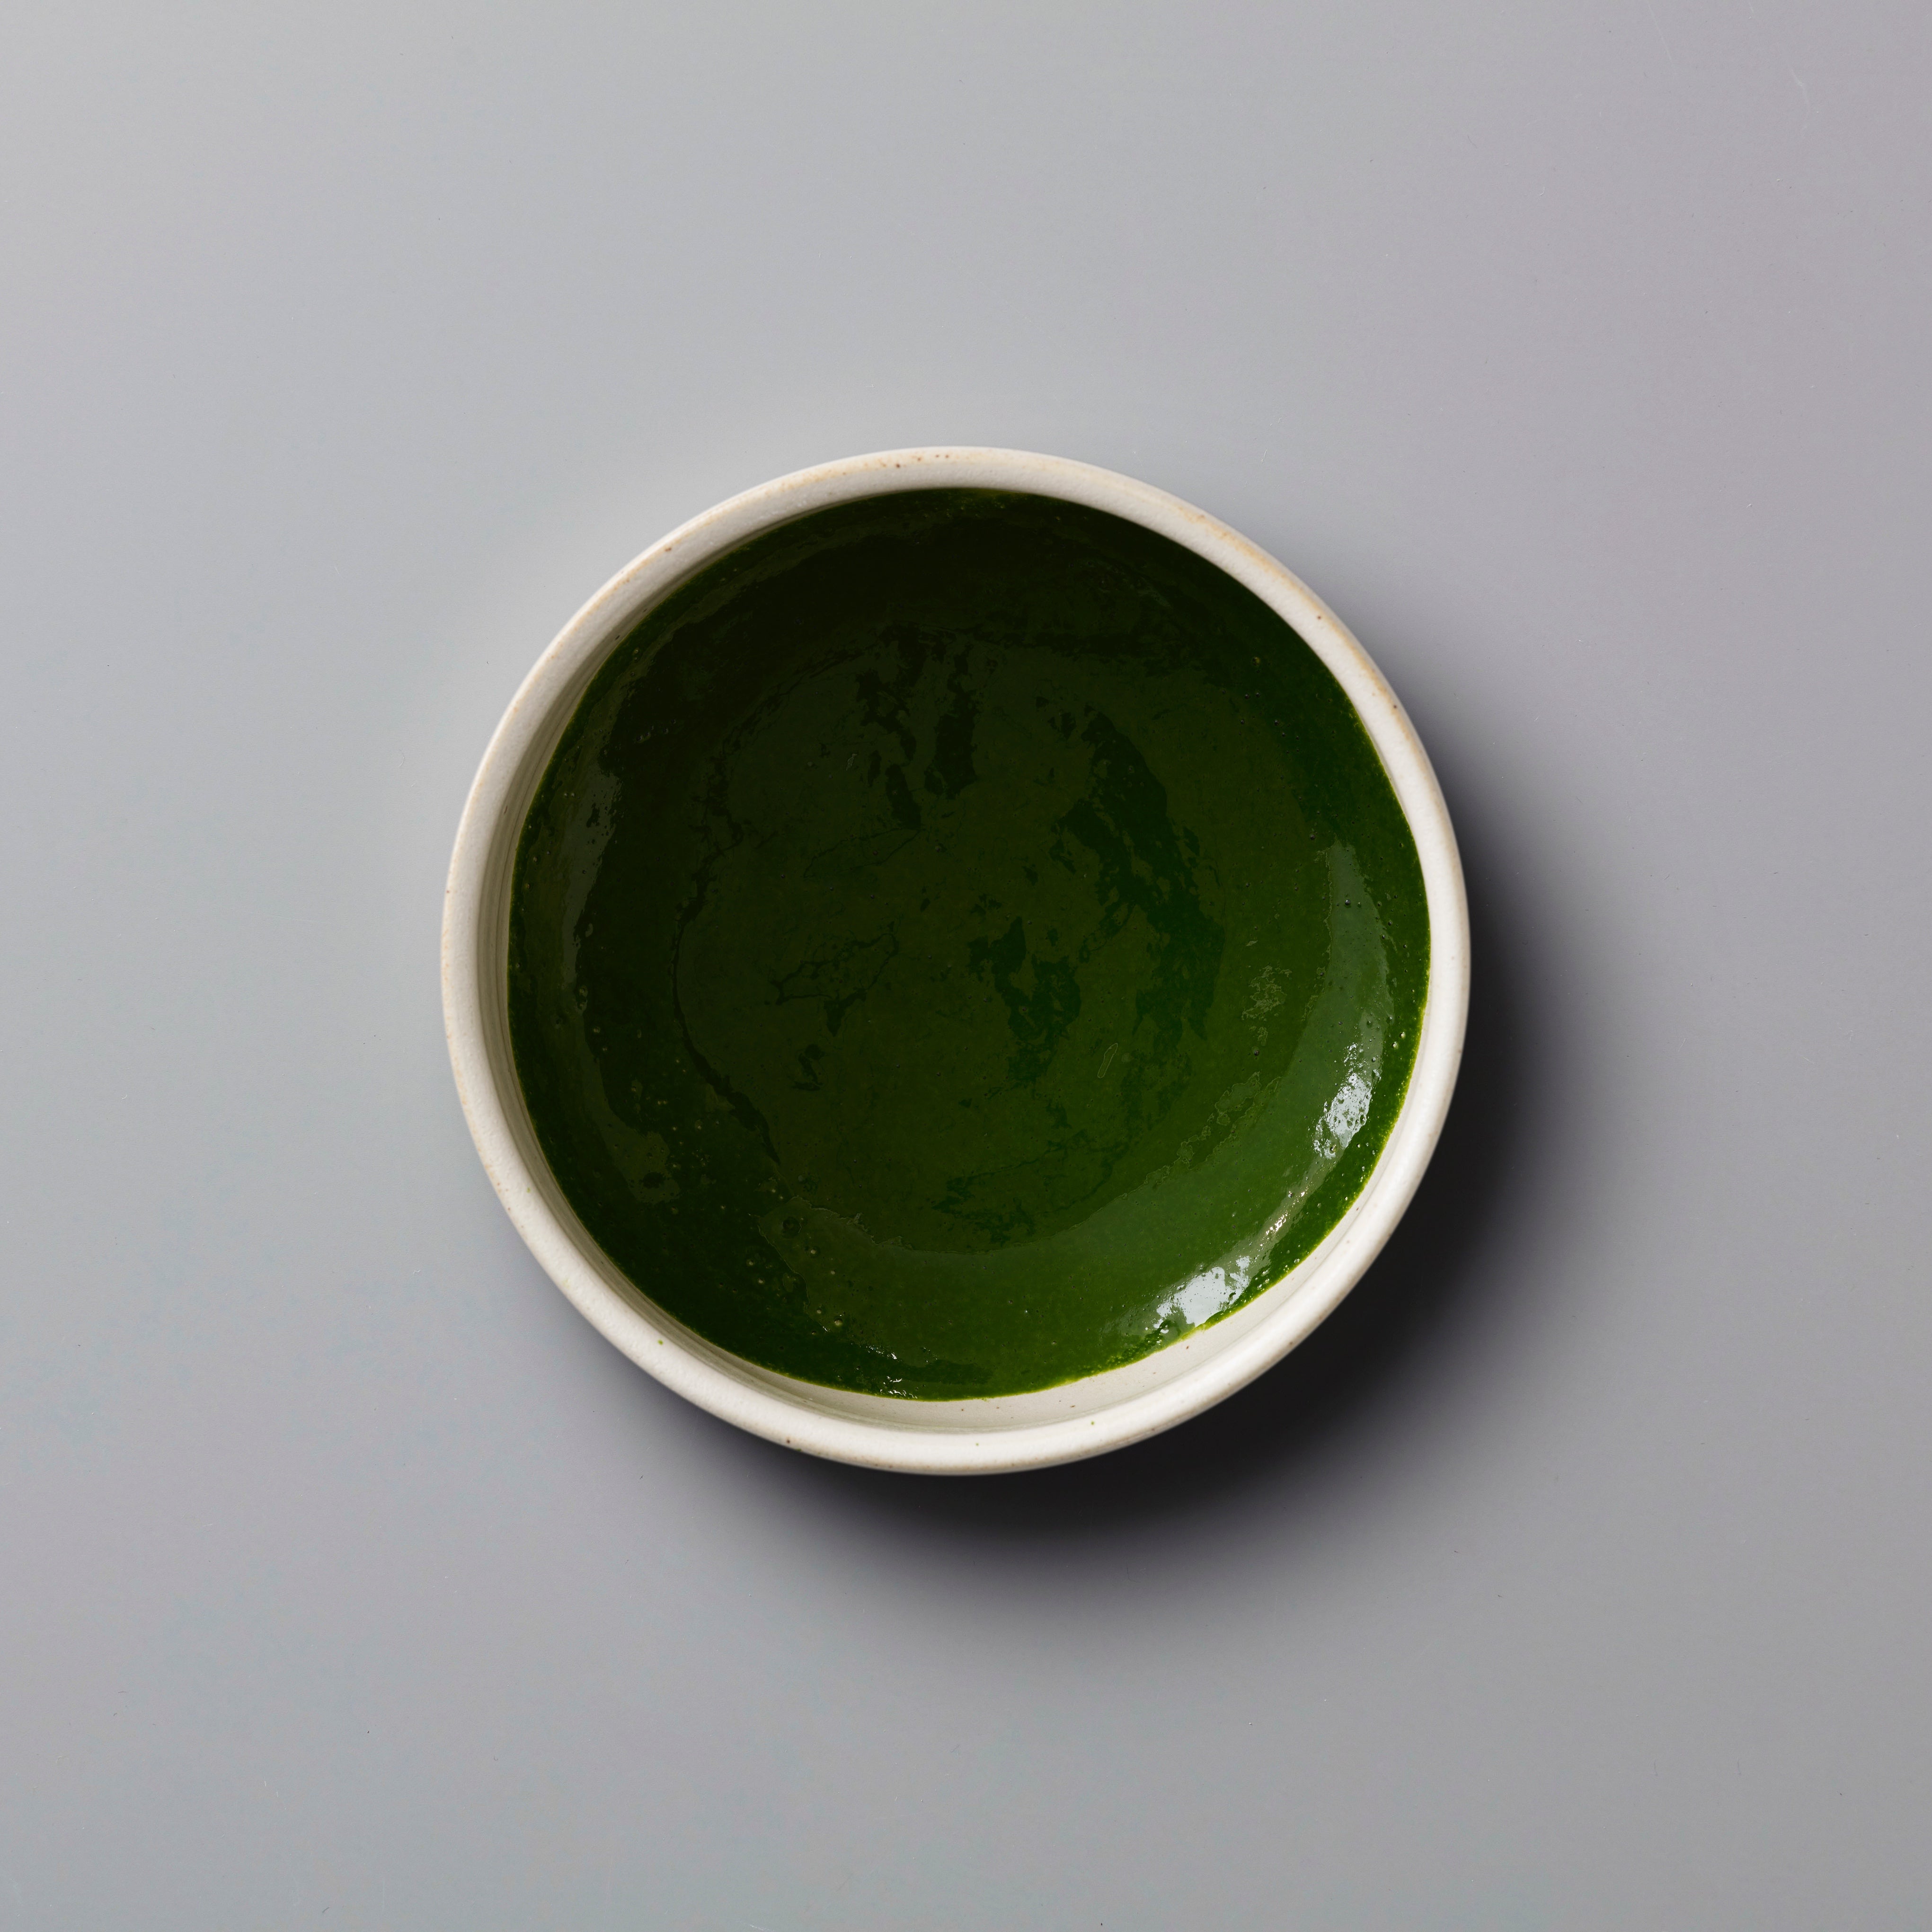 Green Black Matcha Bowl - The Republic of Tea | (1) 12 oz Bowl